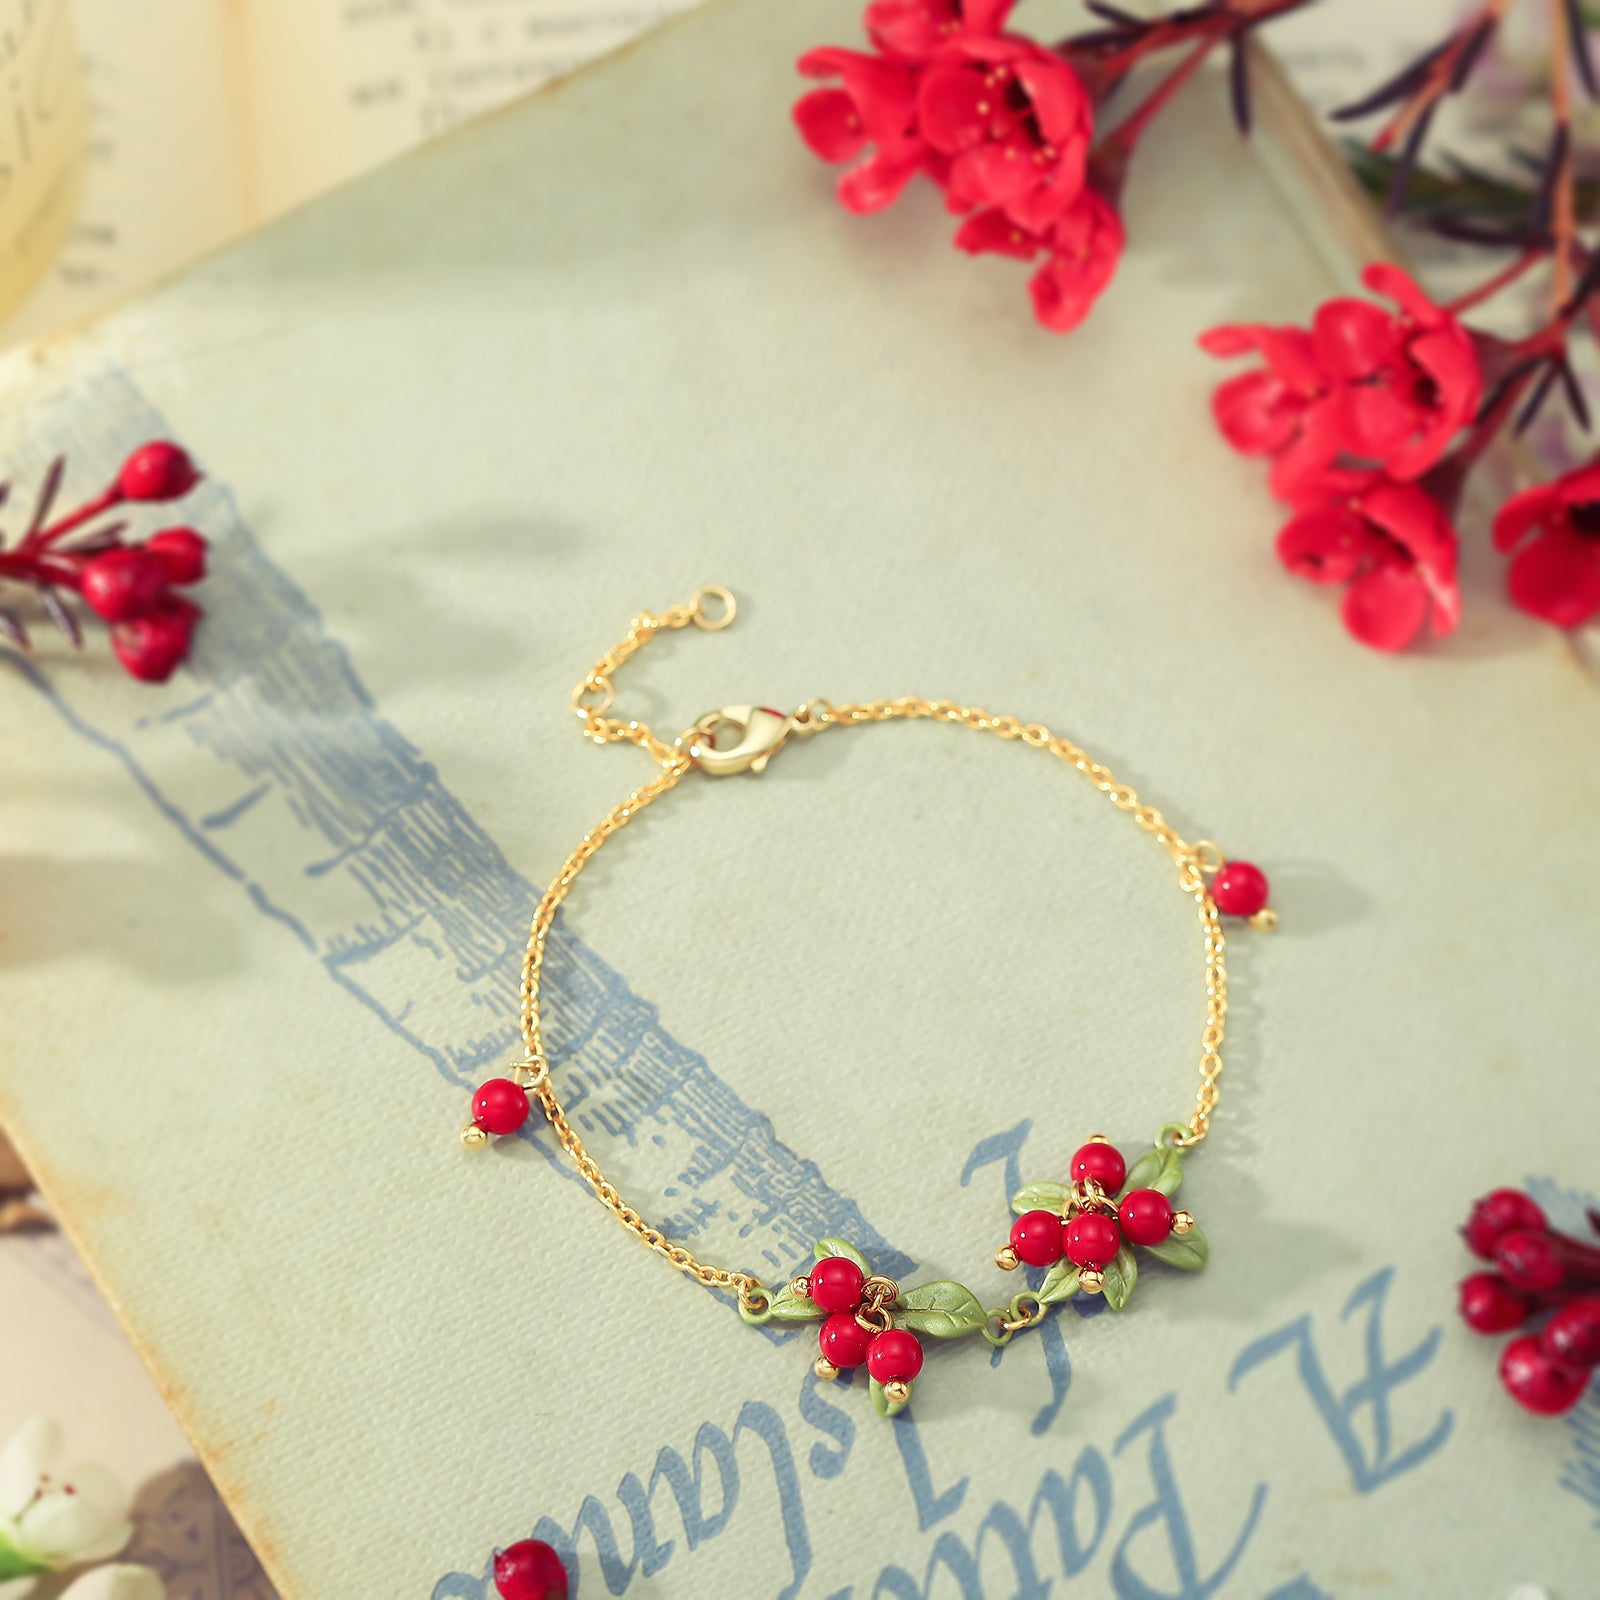 Cranberry Gold Bracelet